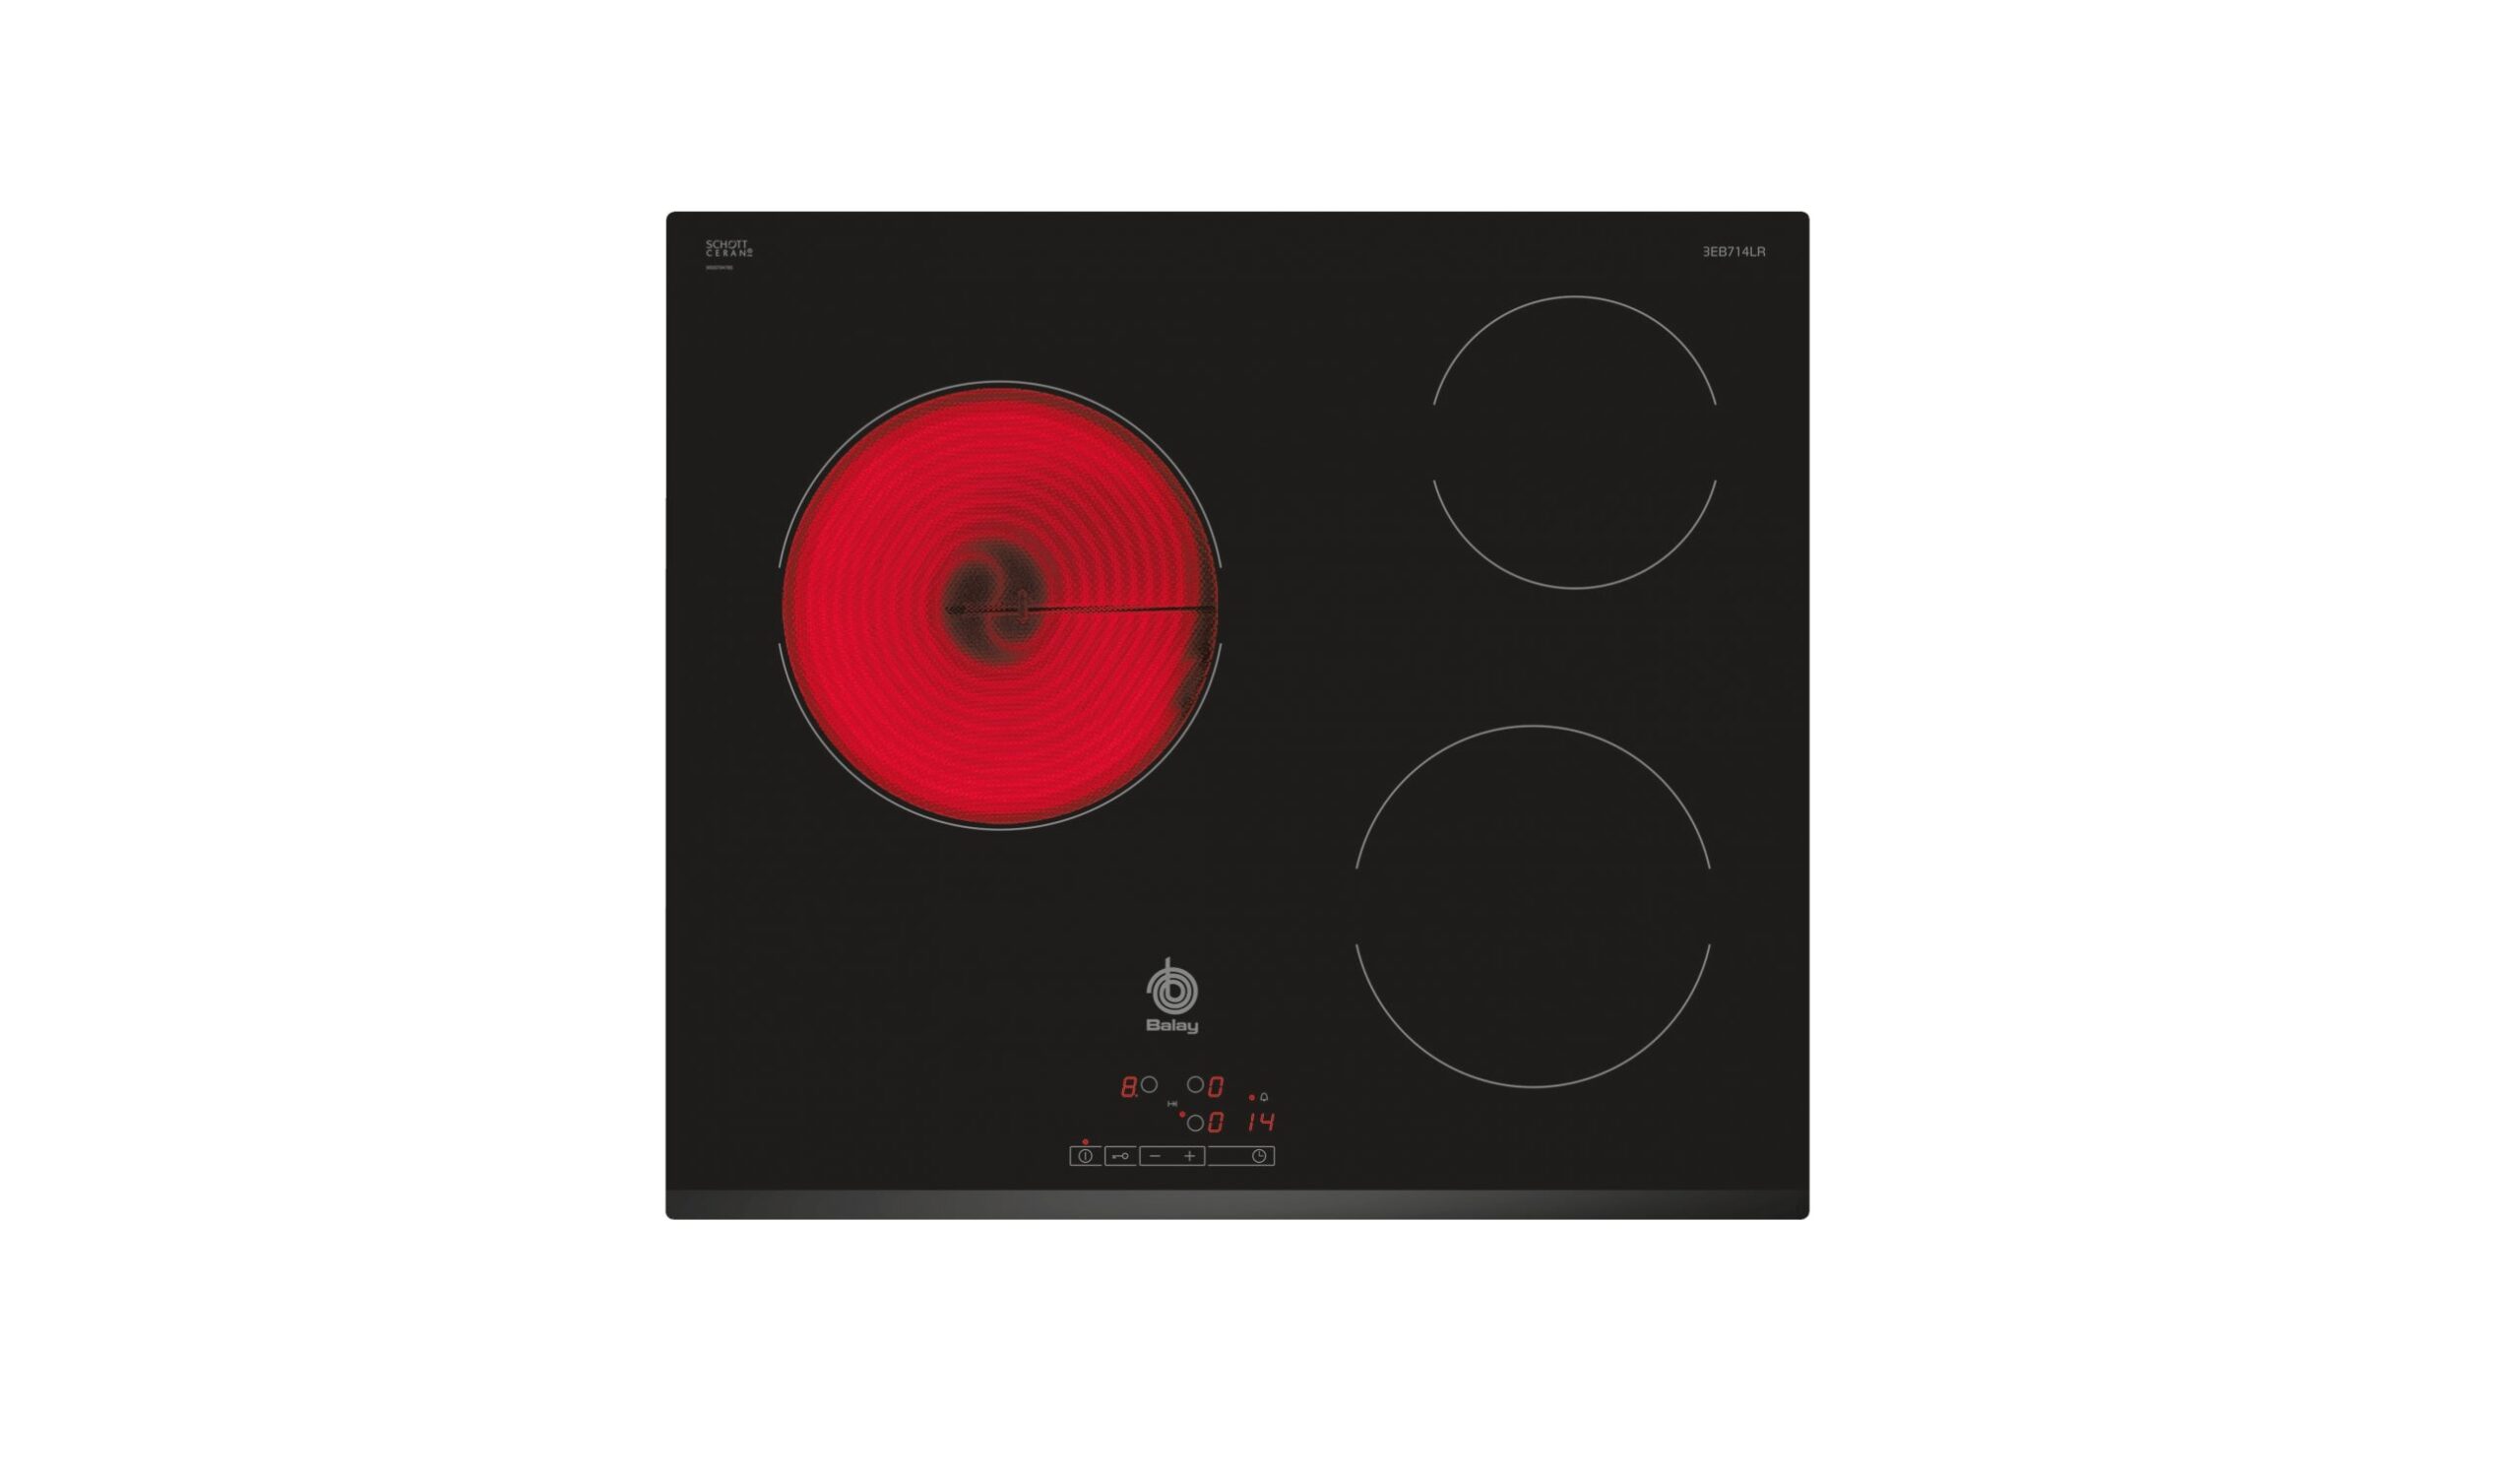 Placa de cocina Balay 3EB714LR Vitrocerámica negro